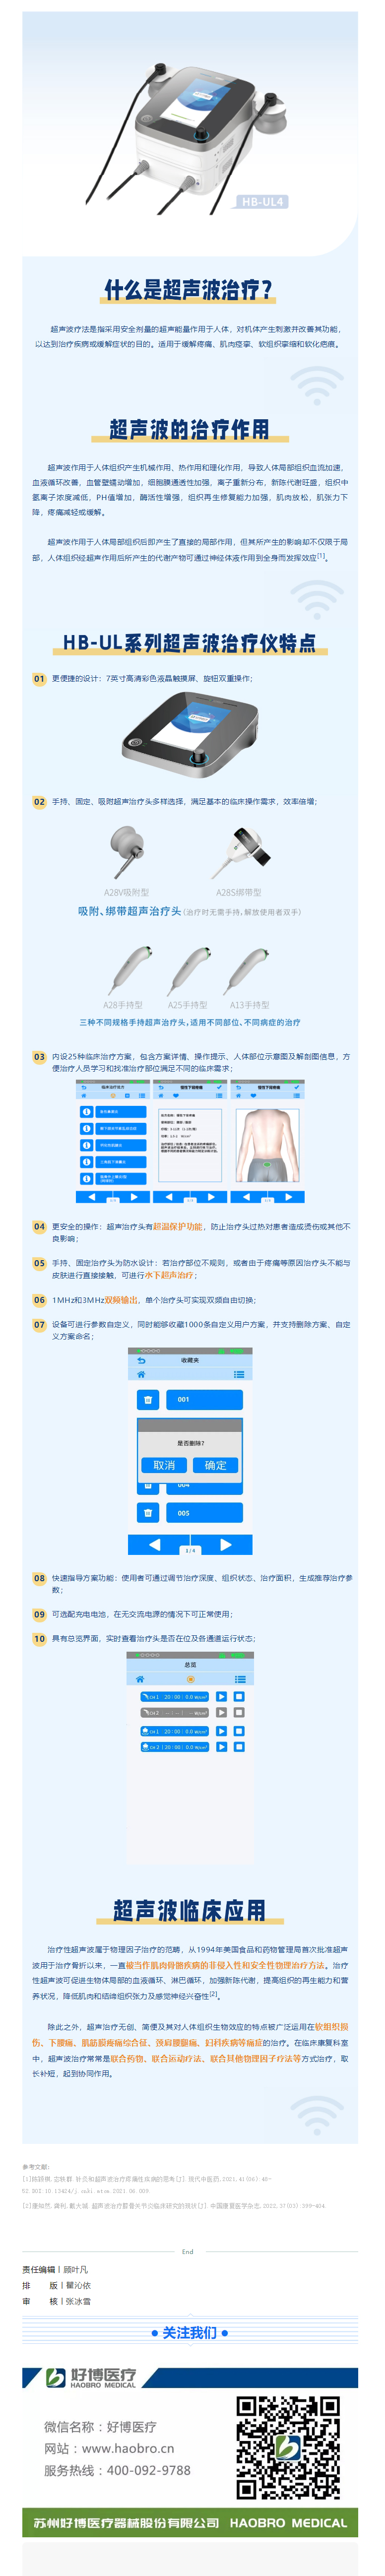 BOB体彩新品 申请出战 _ HB-UL系列双频超声波BOB体彩官网.jpg